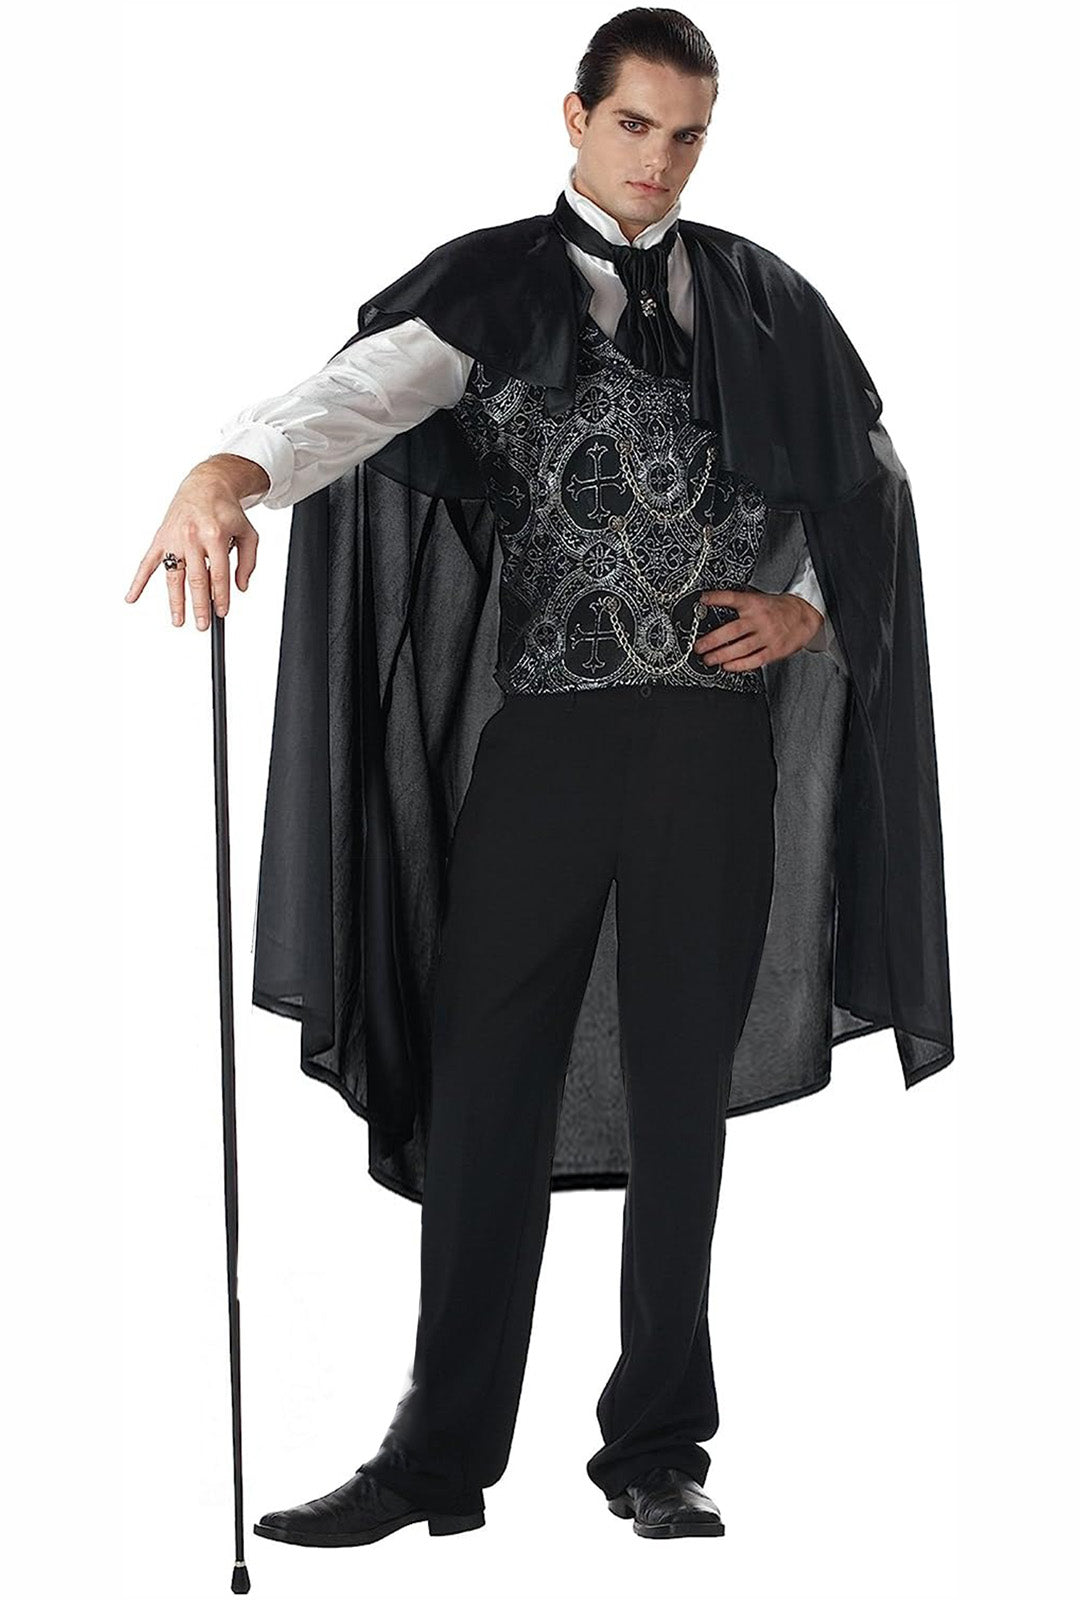 Victorian Vampire Costume